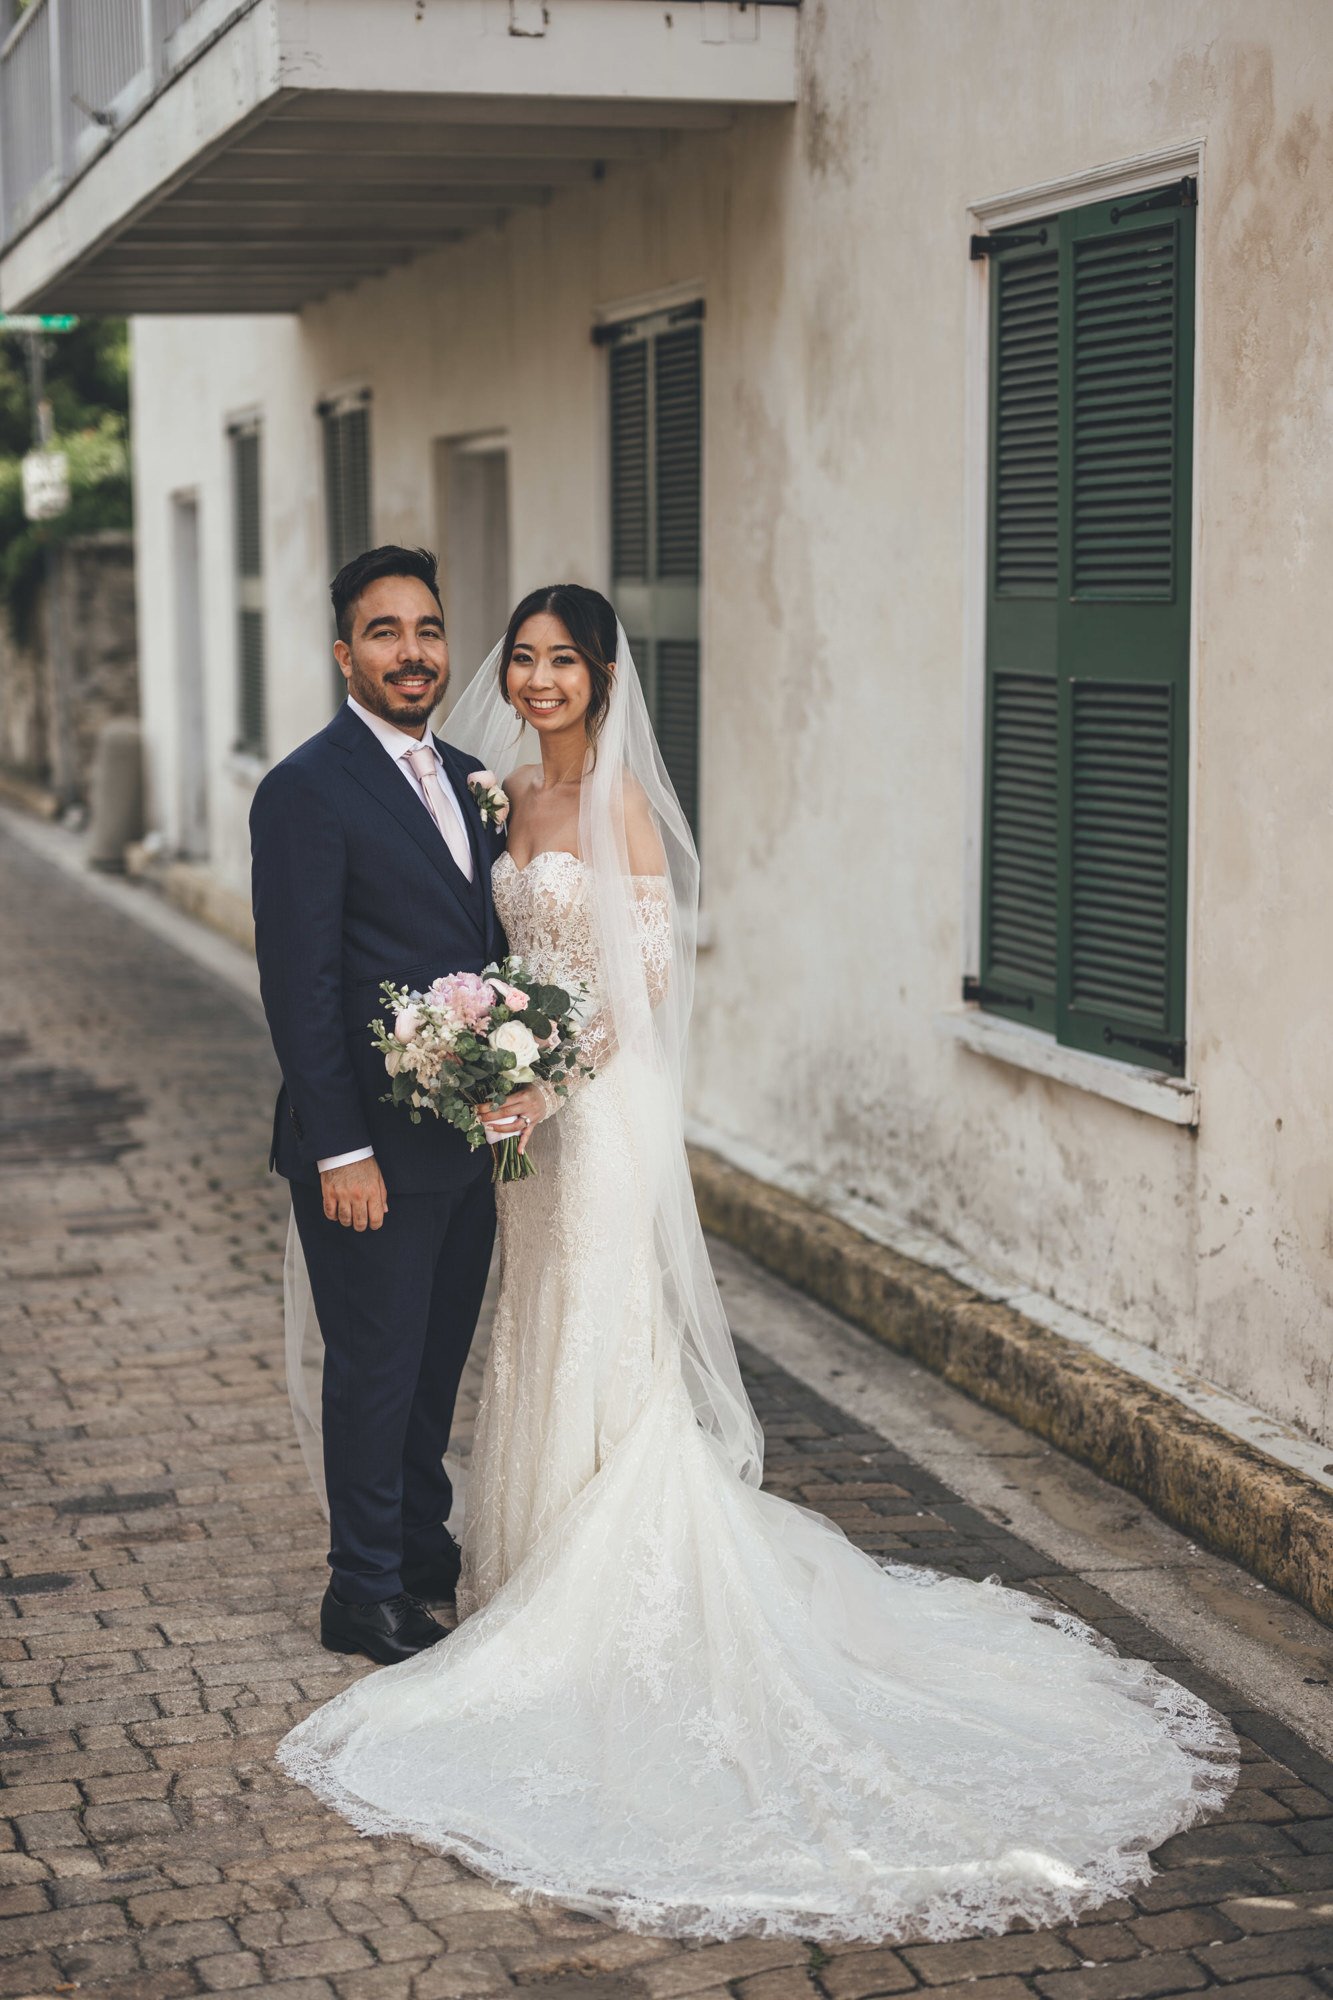 Bow Tie Photo & Video bridal portraits before wedding reception in St. Augustine, FL.jpg